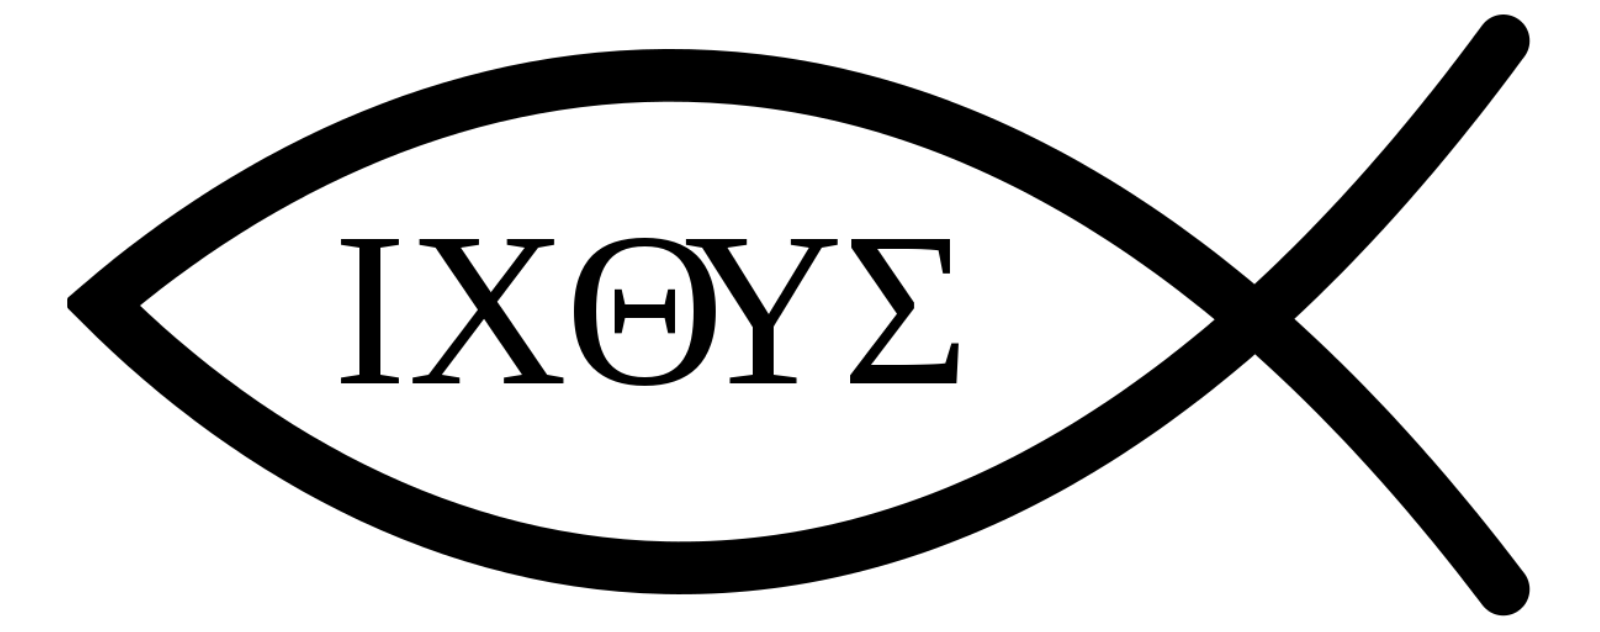 Ichthys greek letters